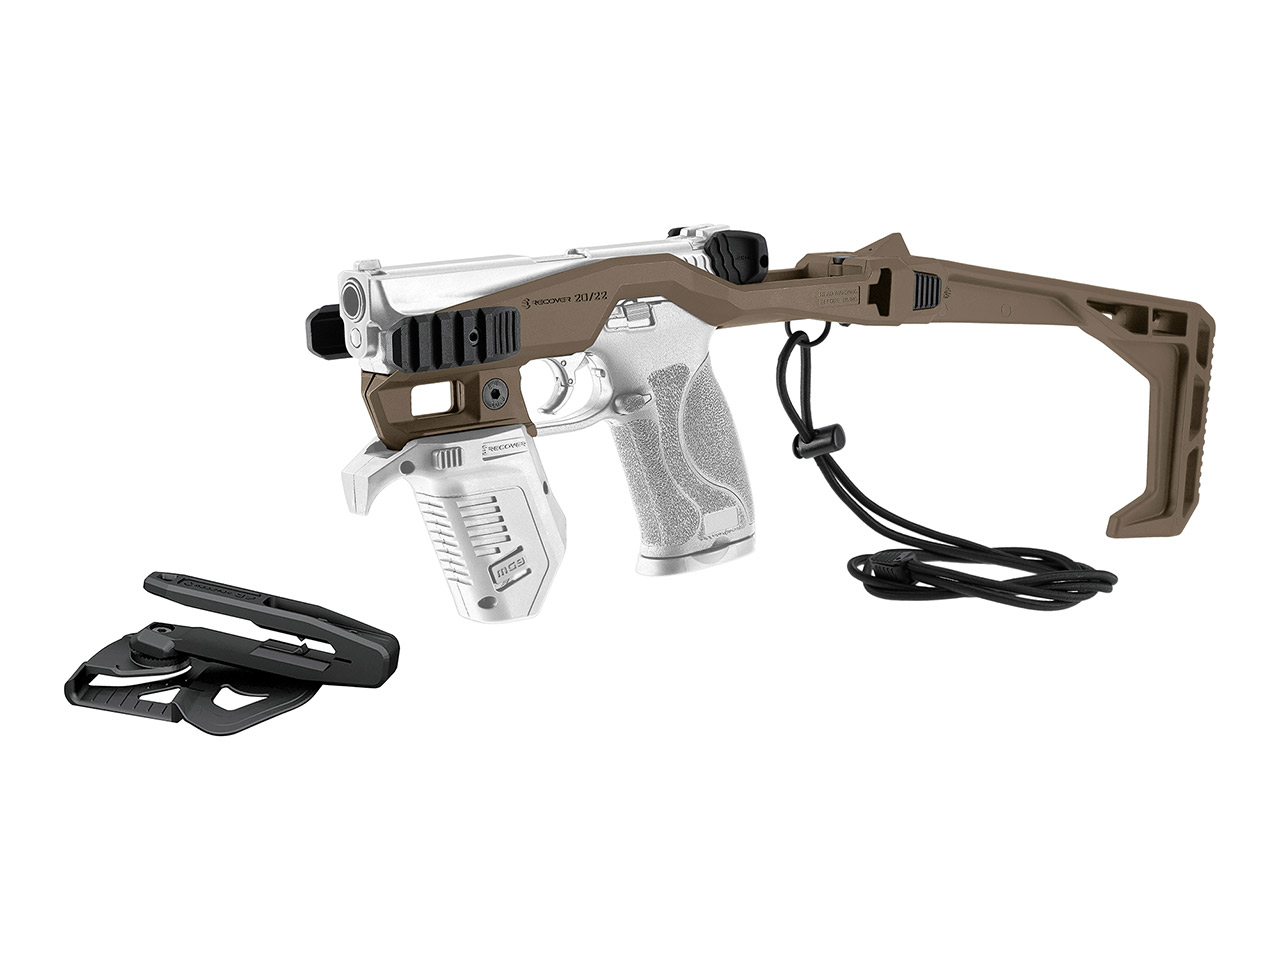 Recover 20/22 Stabilizer Basiskit Level 2 für diverse Smith & Wesson M&P Pistolen desert tan inklusive Holster